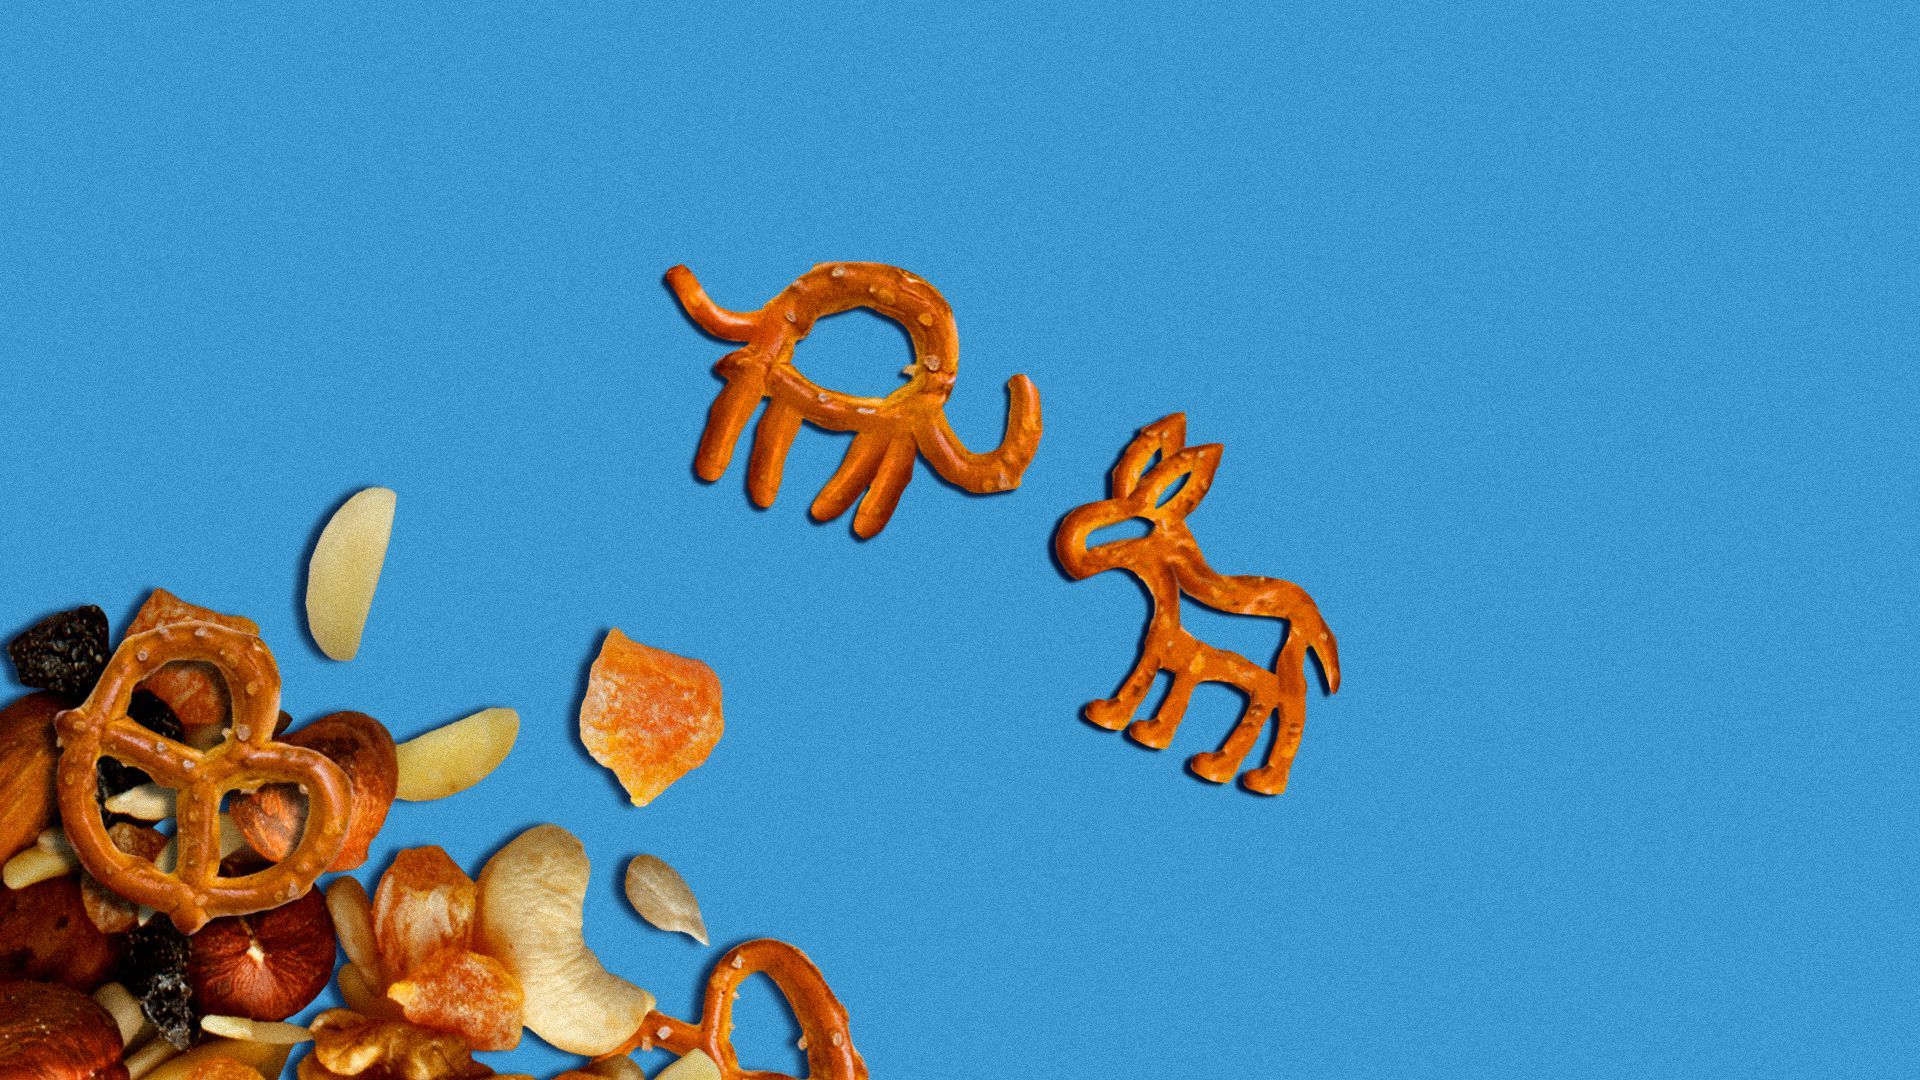 Illustration of trail mix with elephant and donkey pretzels